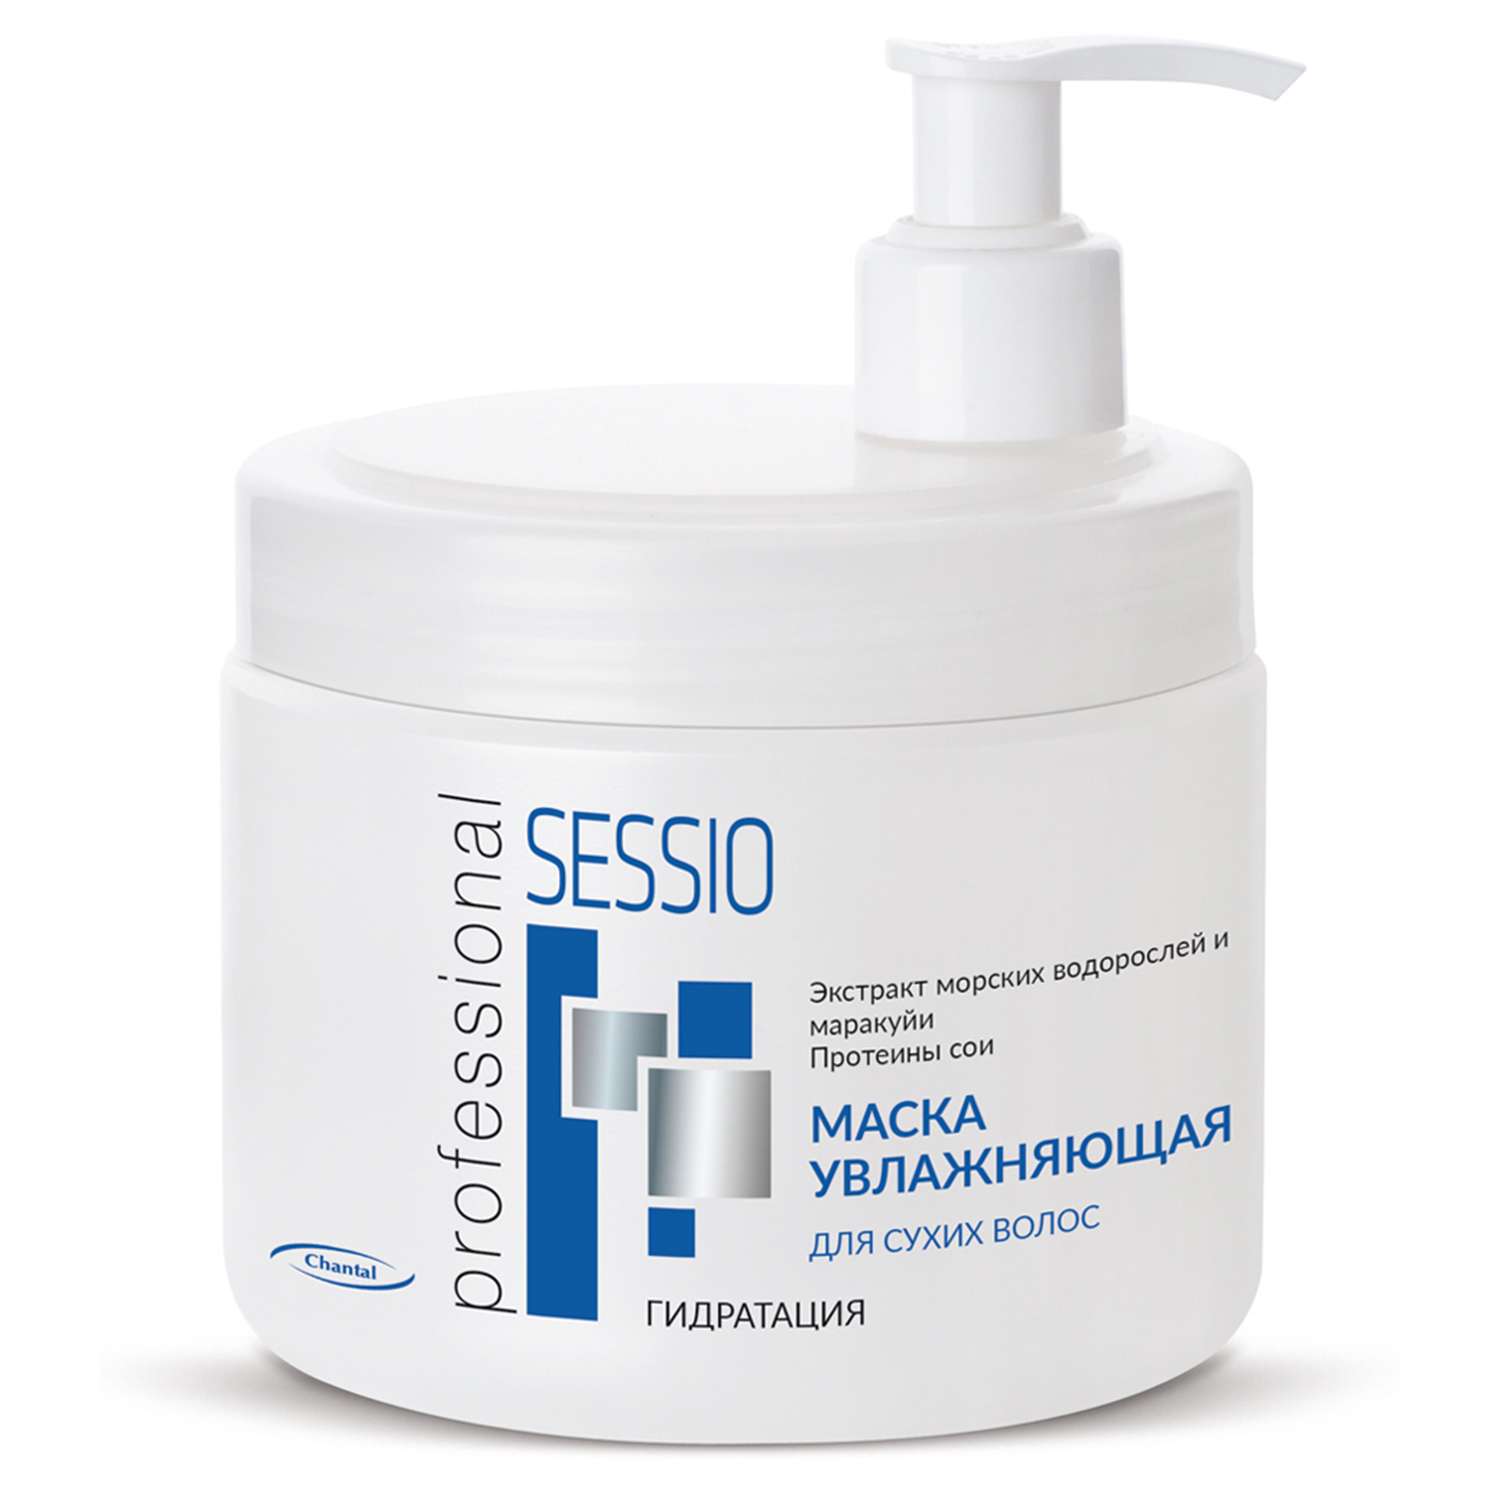 Маска Sessio увлажняющая для сухих волос 500 г - фото 1